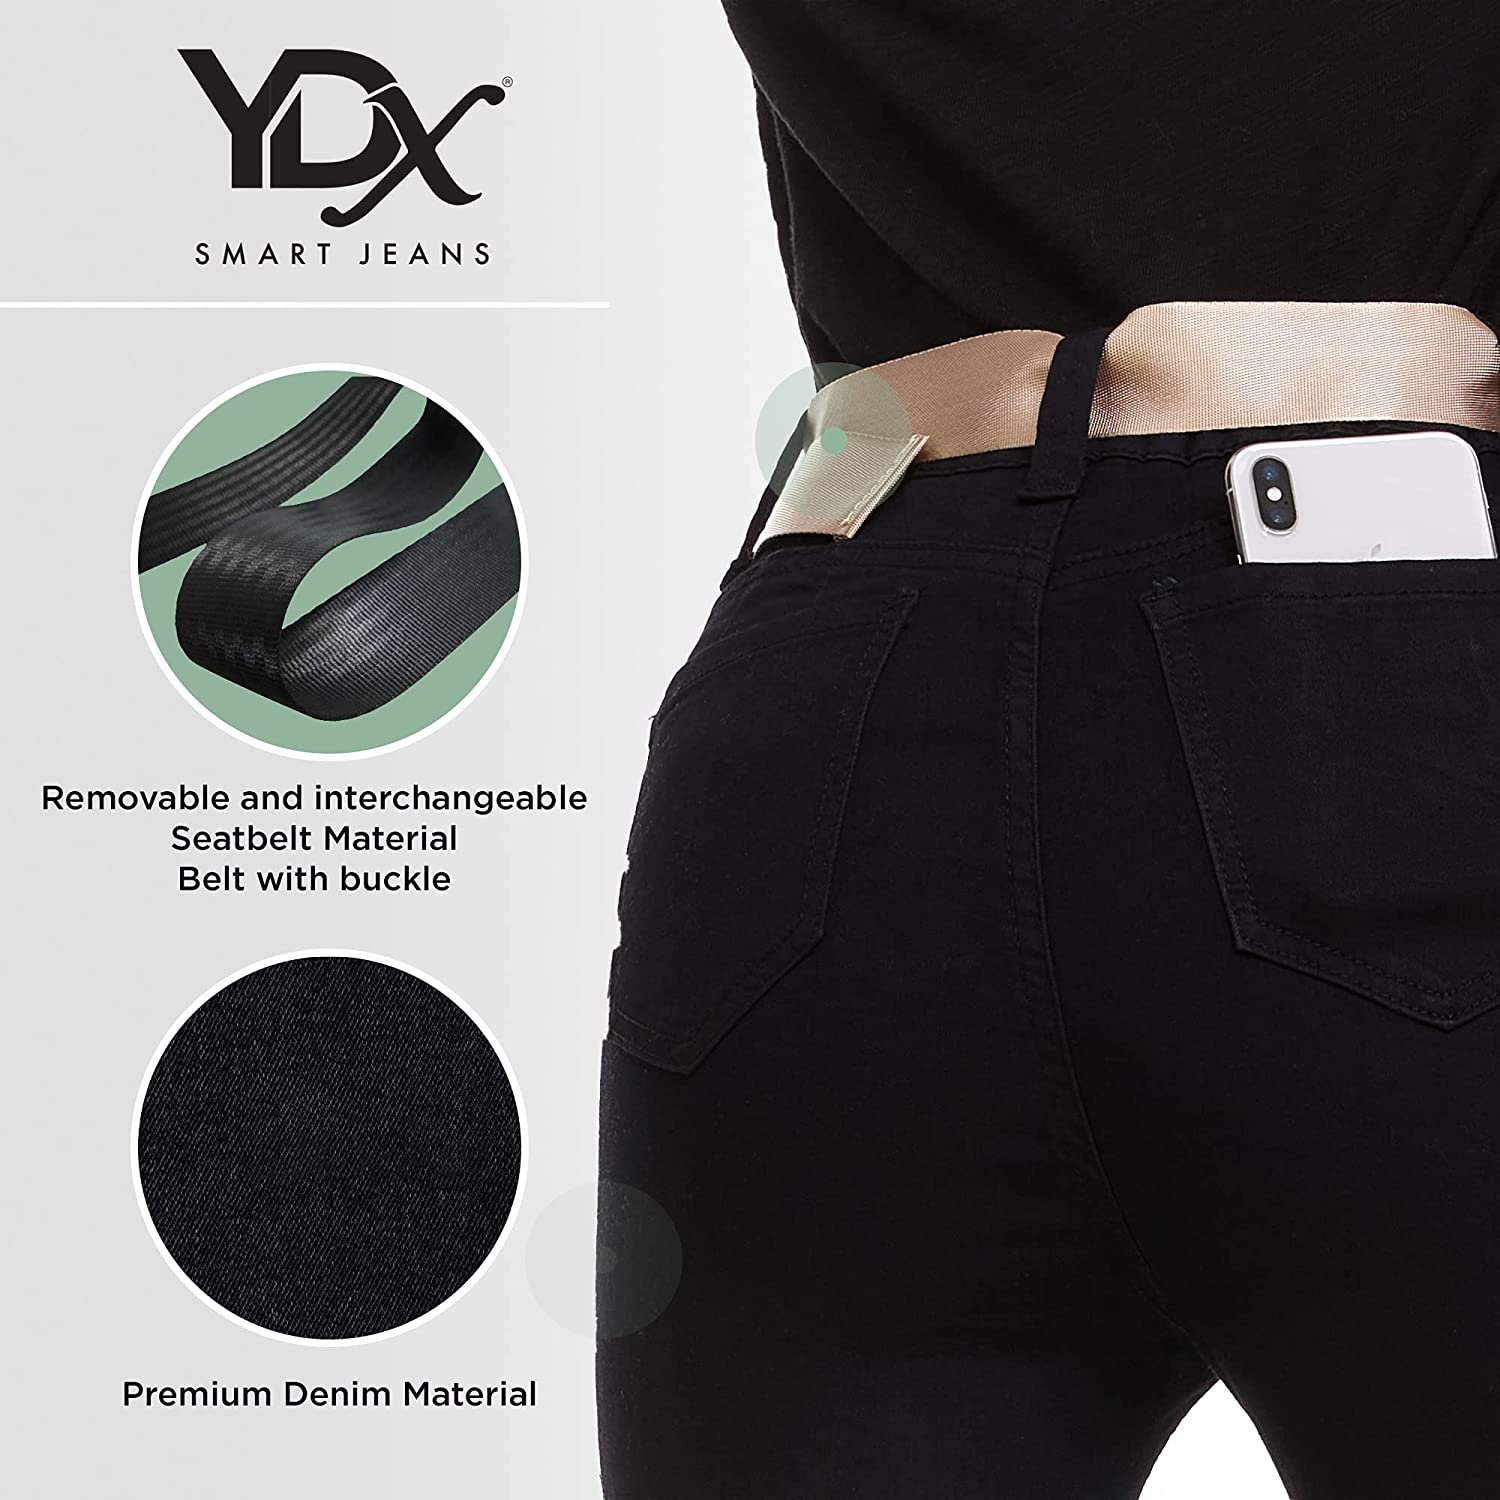 YDX Teen Girls's Twill Stretchy Jogger Pants, Sand Camo w/Belt, 14 Plus - image 3 of 7